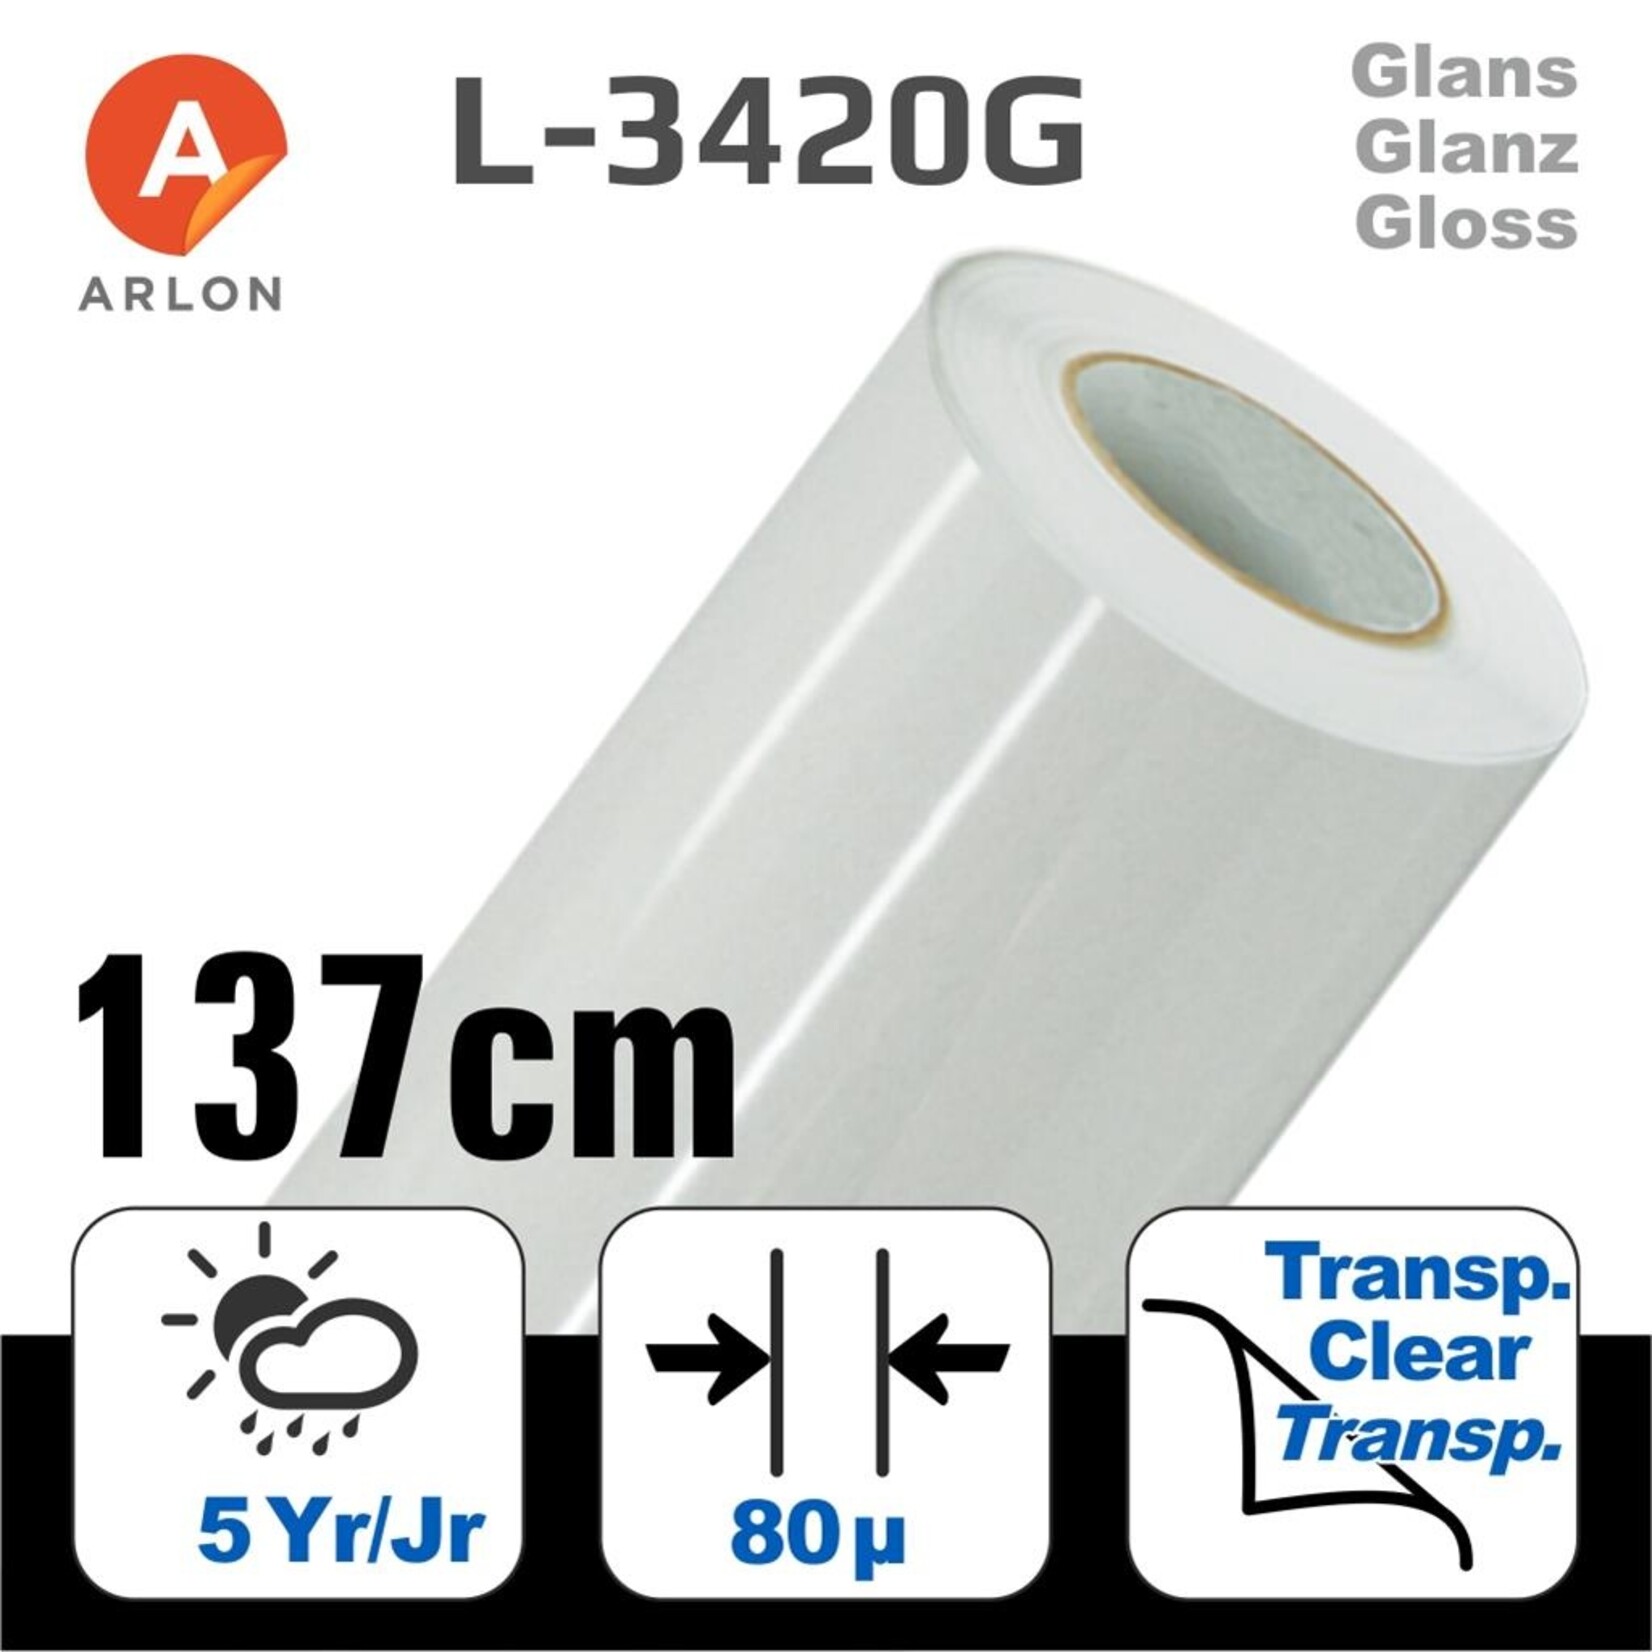 Arlon L-3420 Glanz Laminat Polymer -137 cm